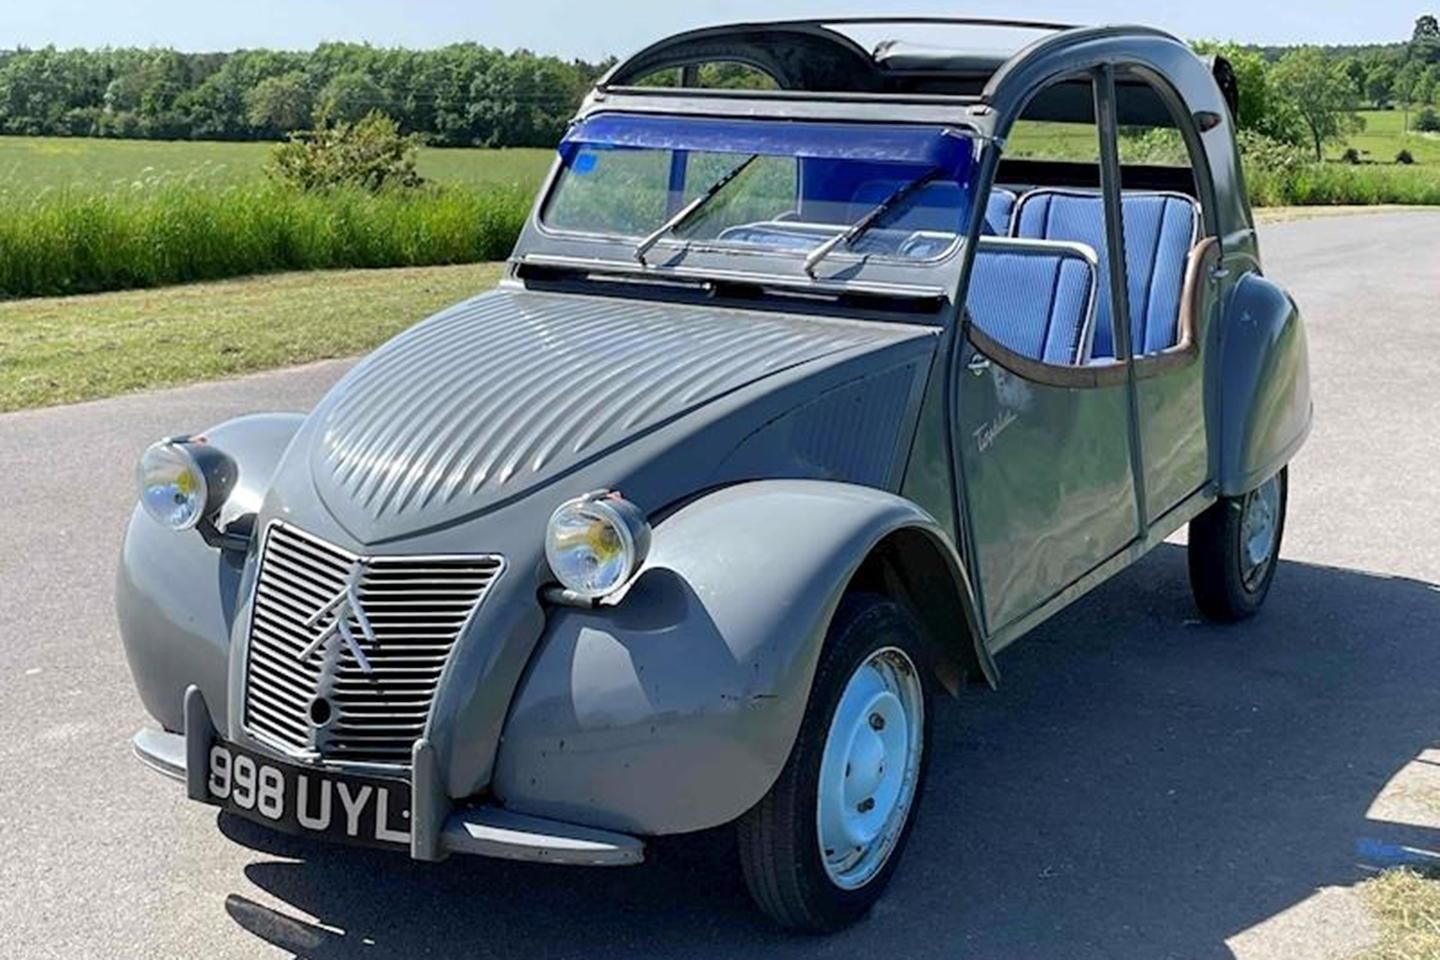 Meet the luxury Citroën 2CV